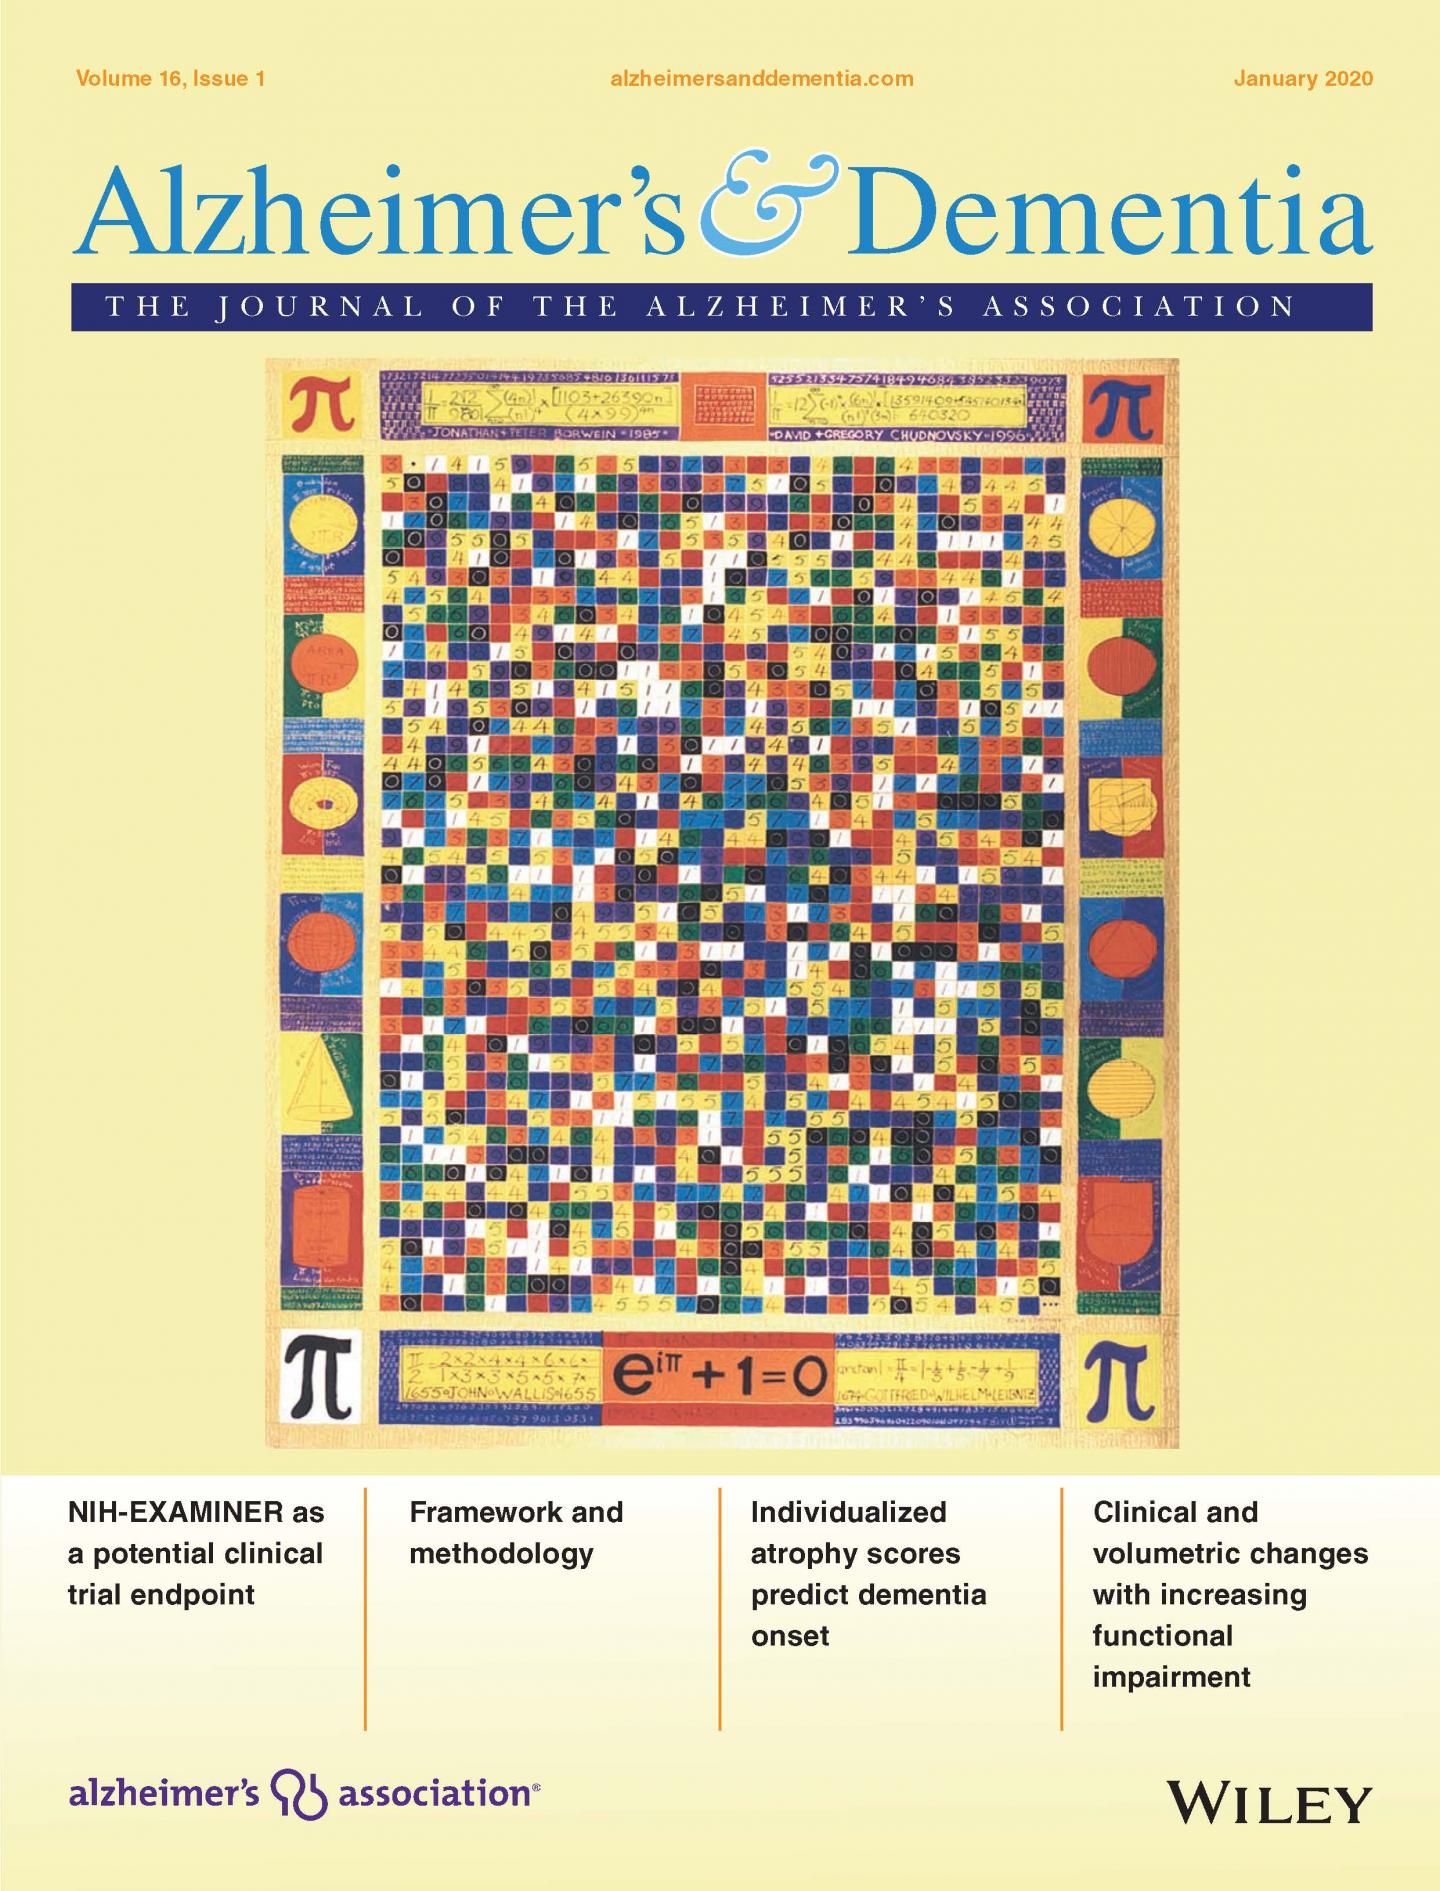 Alzheimer's & Dementia: The Journal of the Alzheimer's Association January 2020 Issue